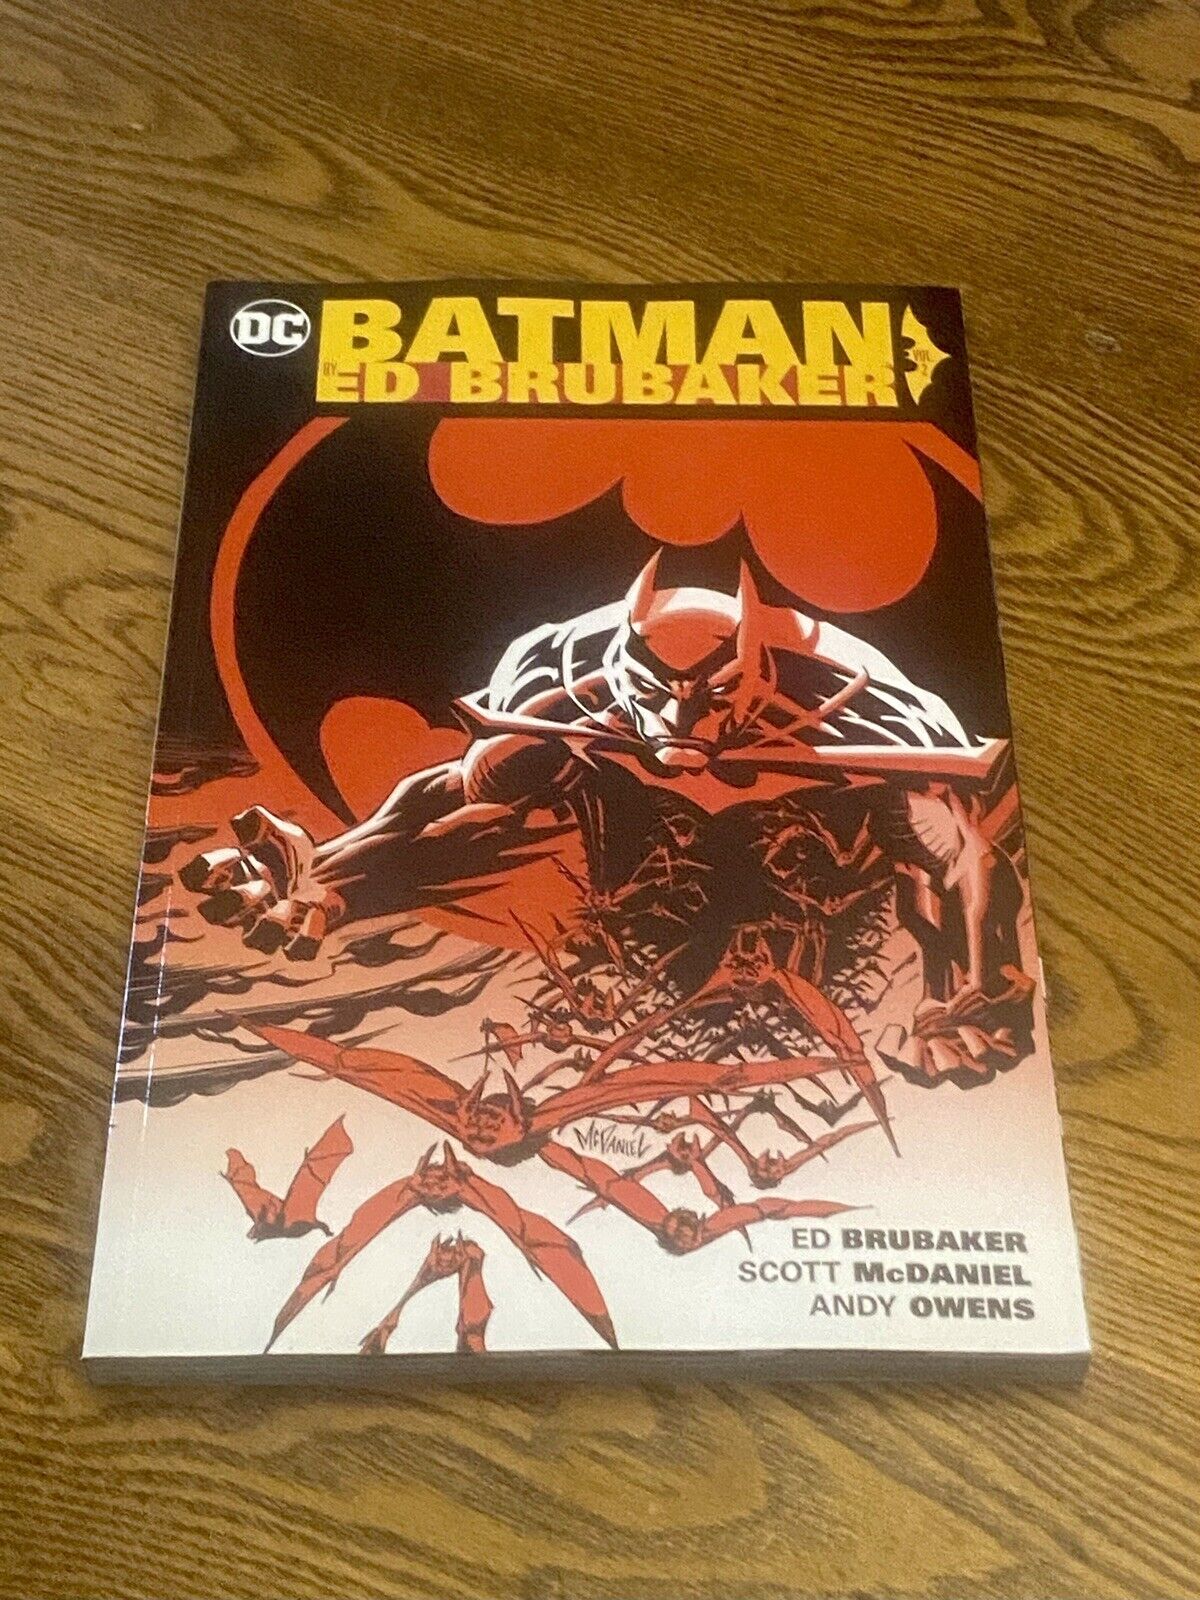 BATMAN by Ed Brubaker Vol 2, 2016. Paperback DC Comics